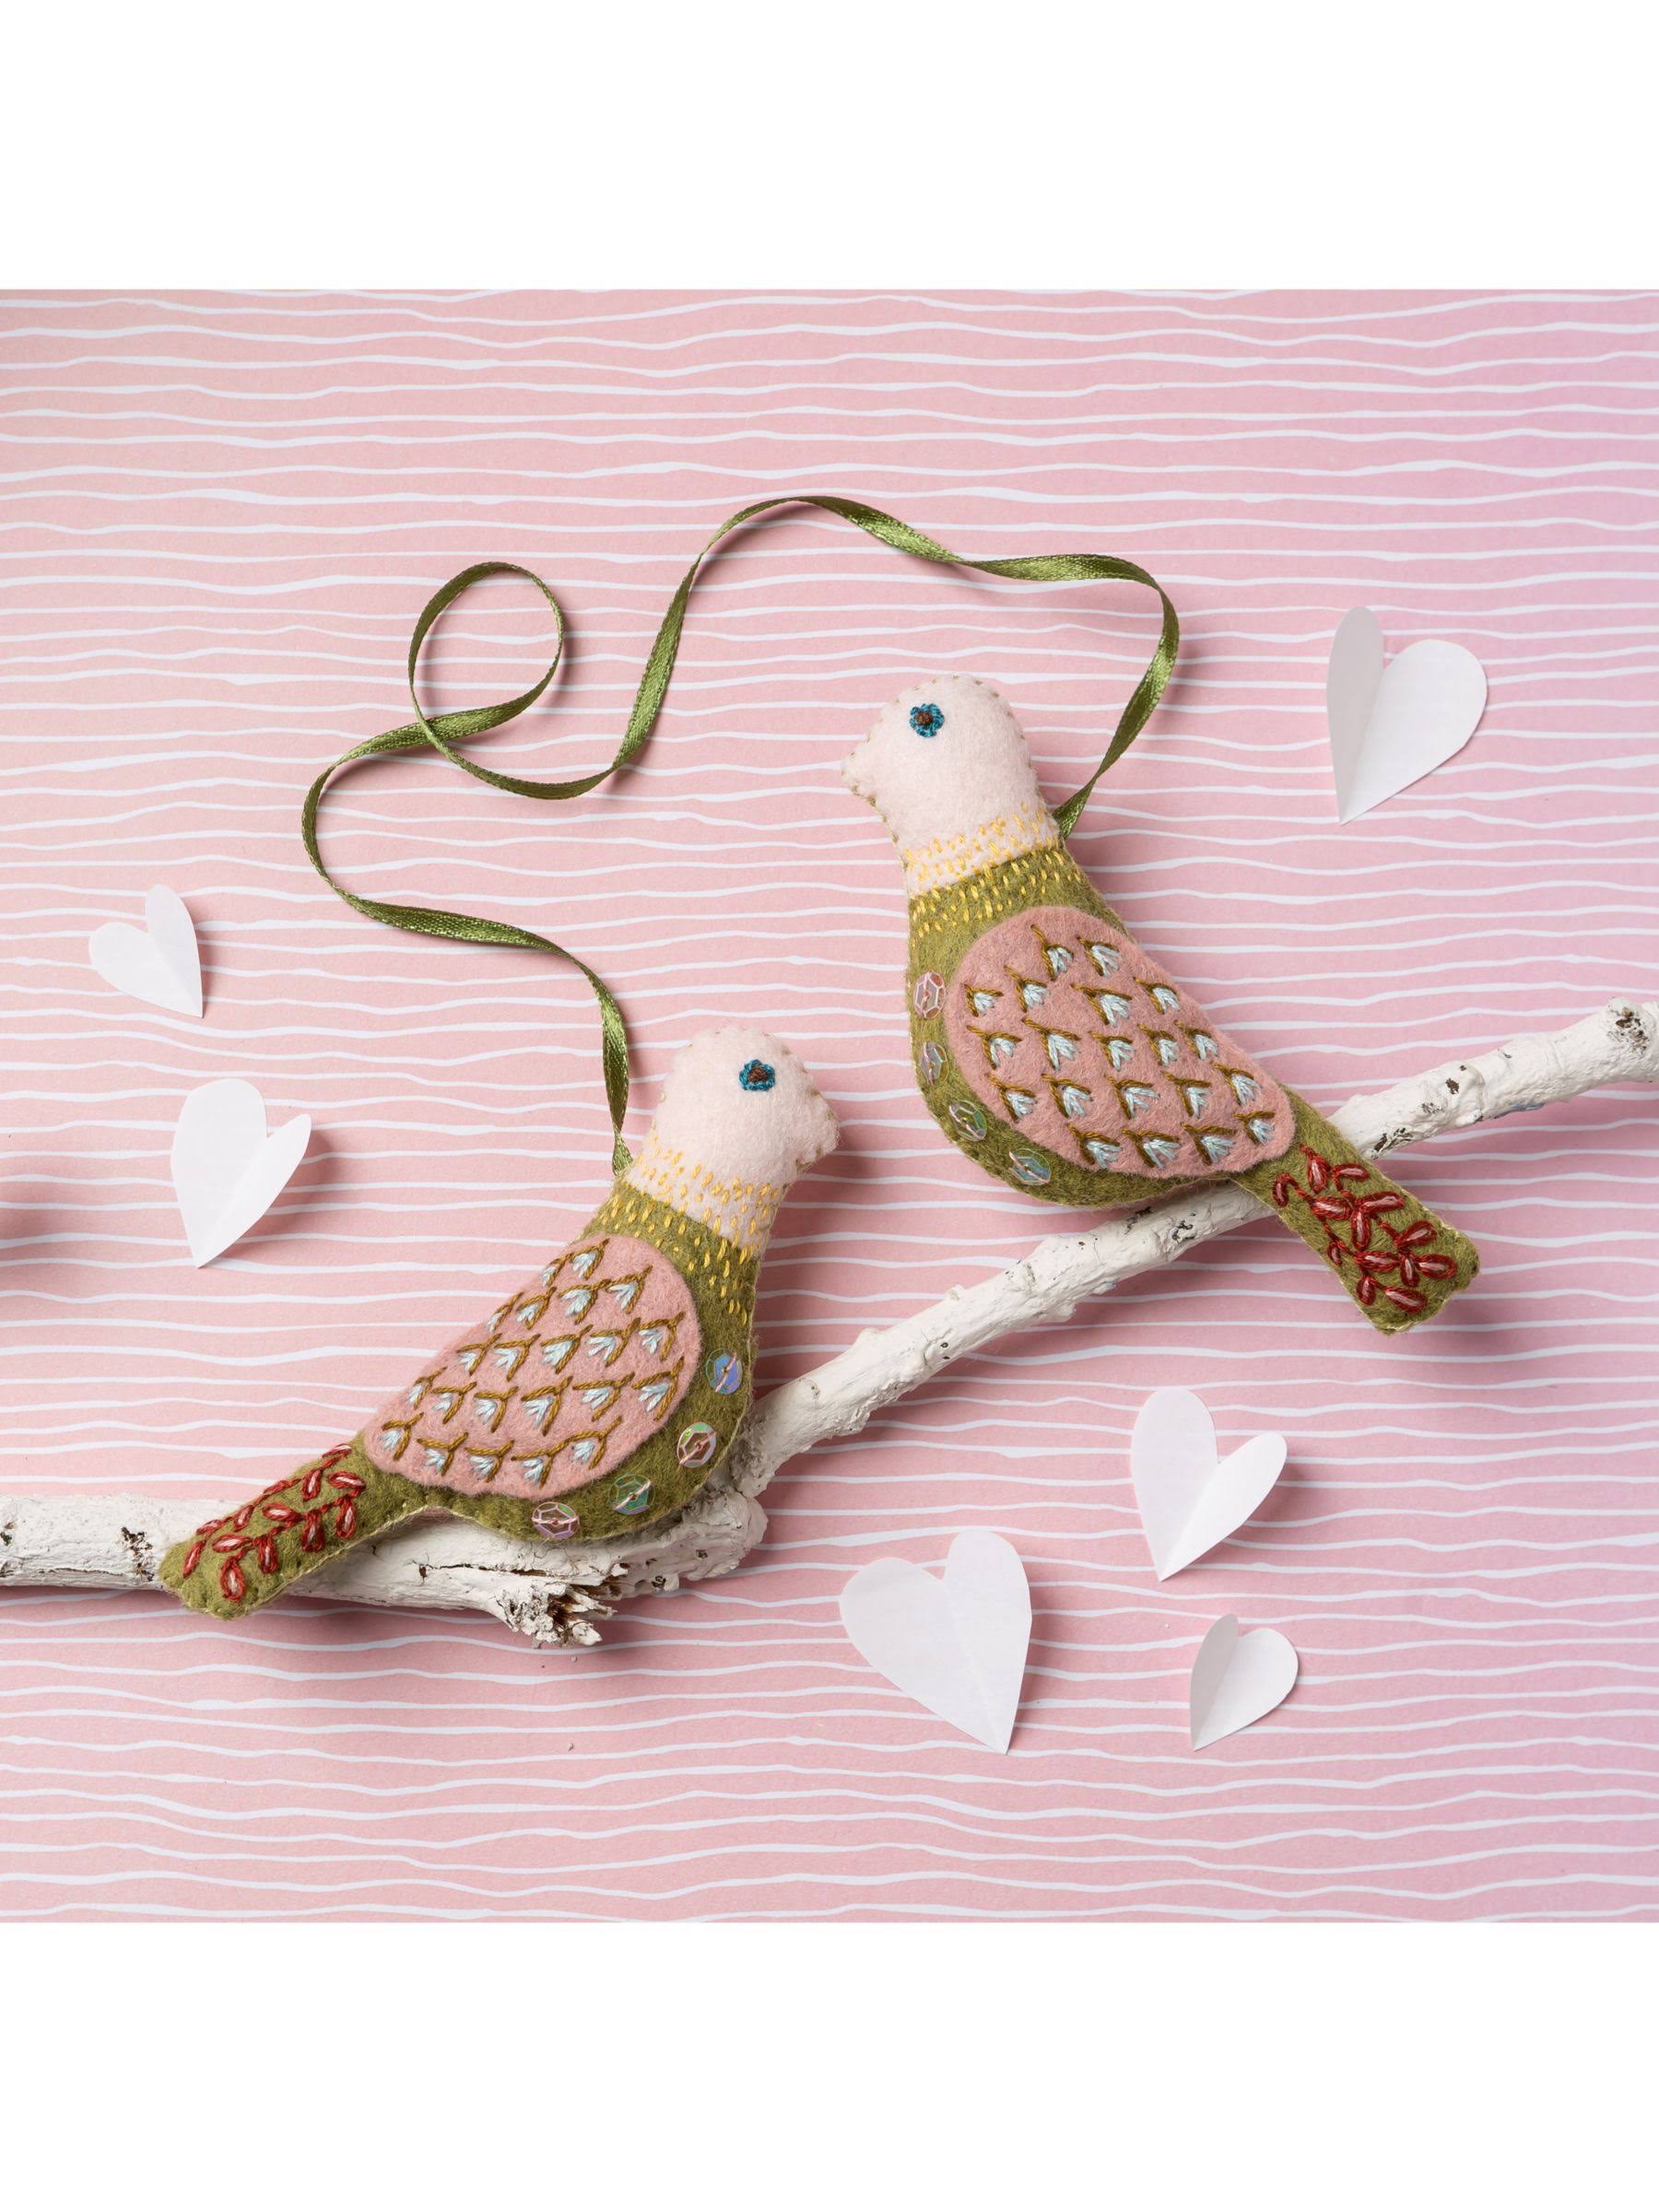 Corinne Lapierre Felt Embroidery Craft Kit - Felt Embroidered Love Birds